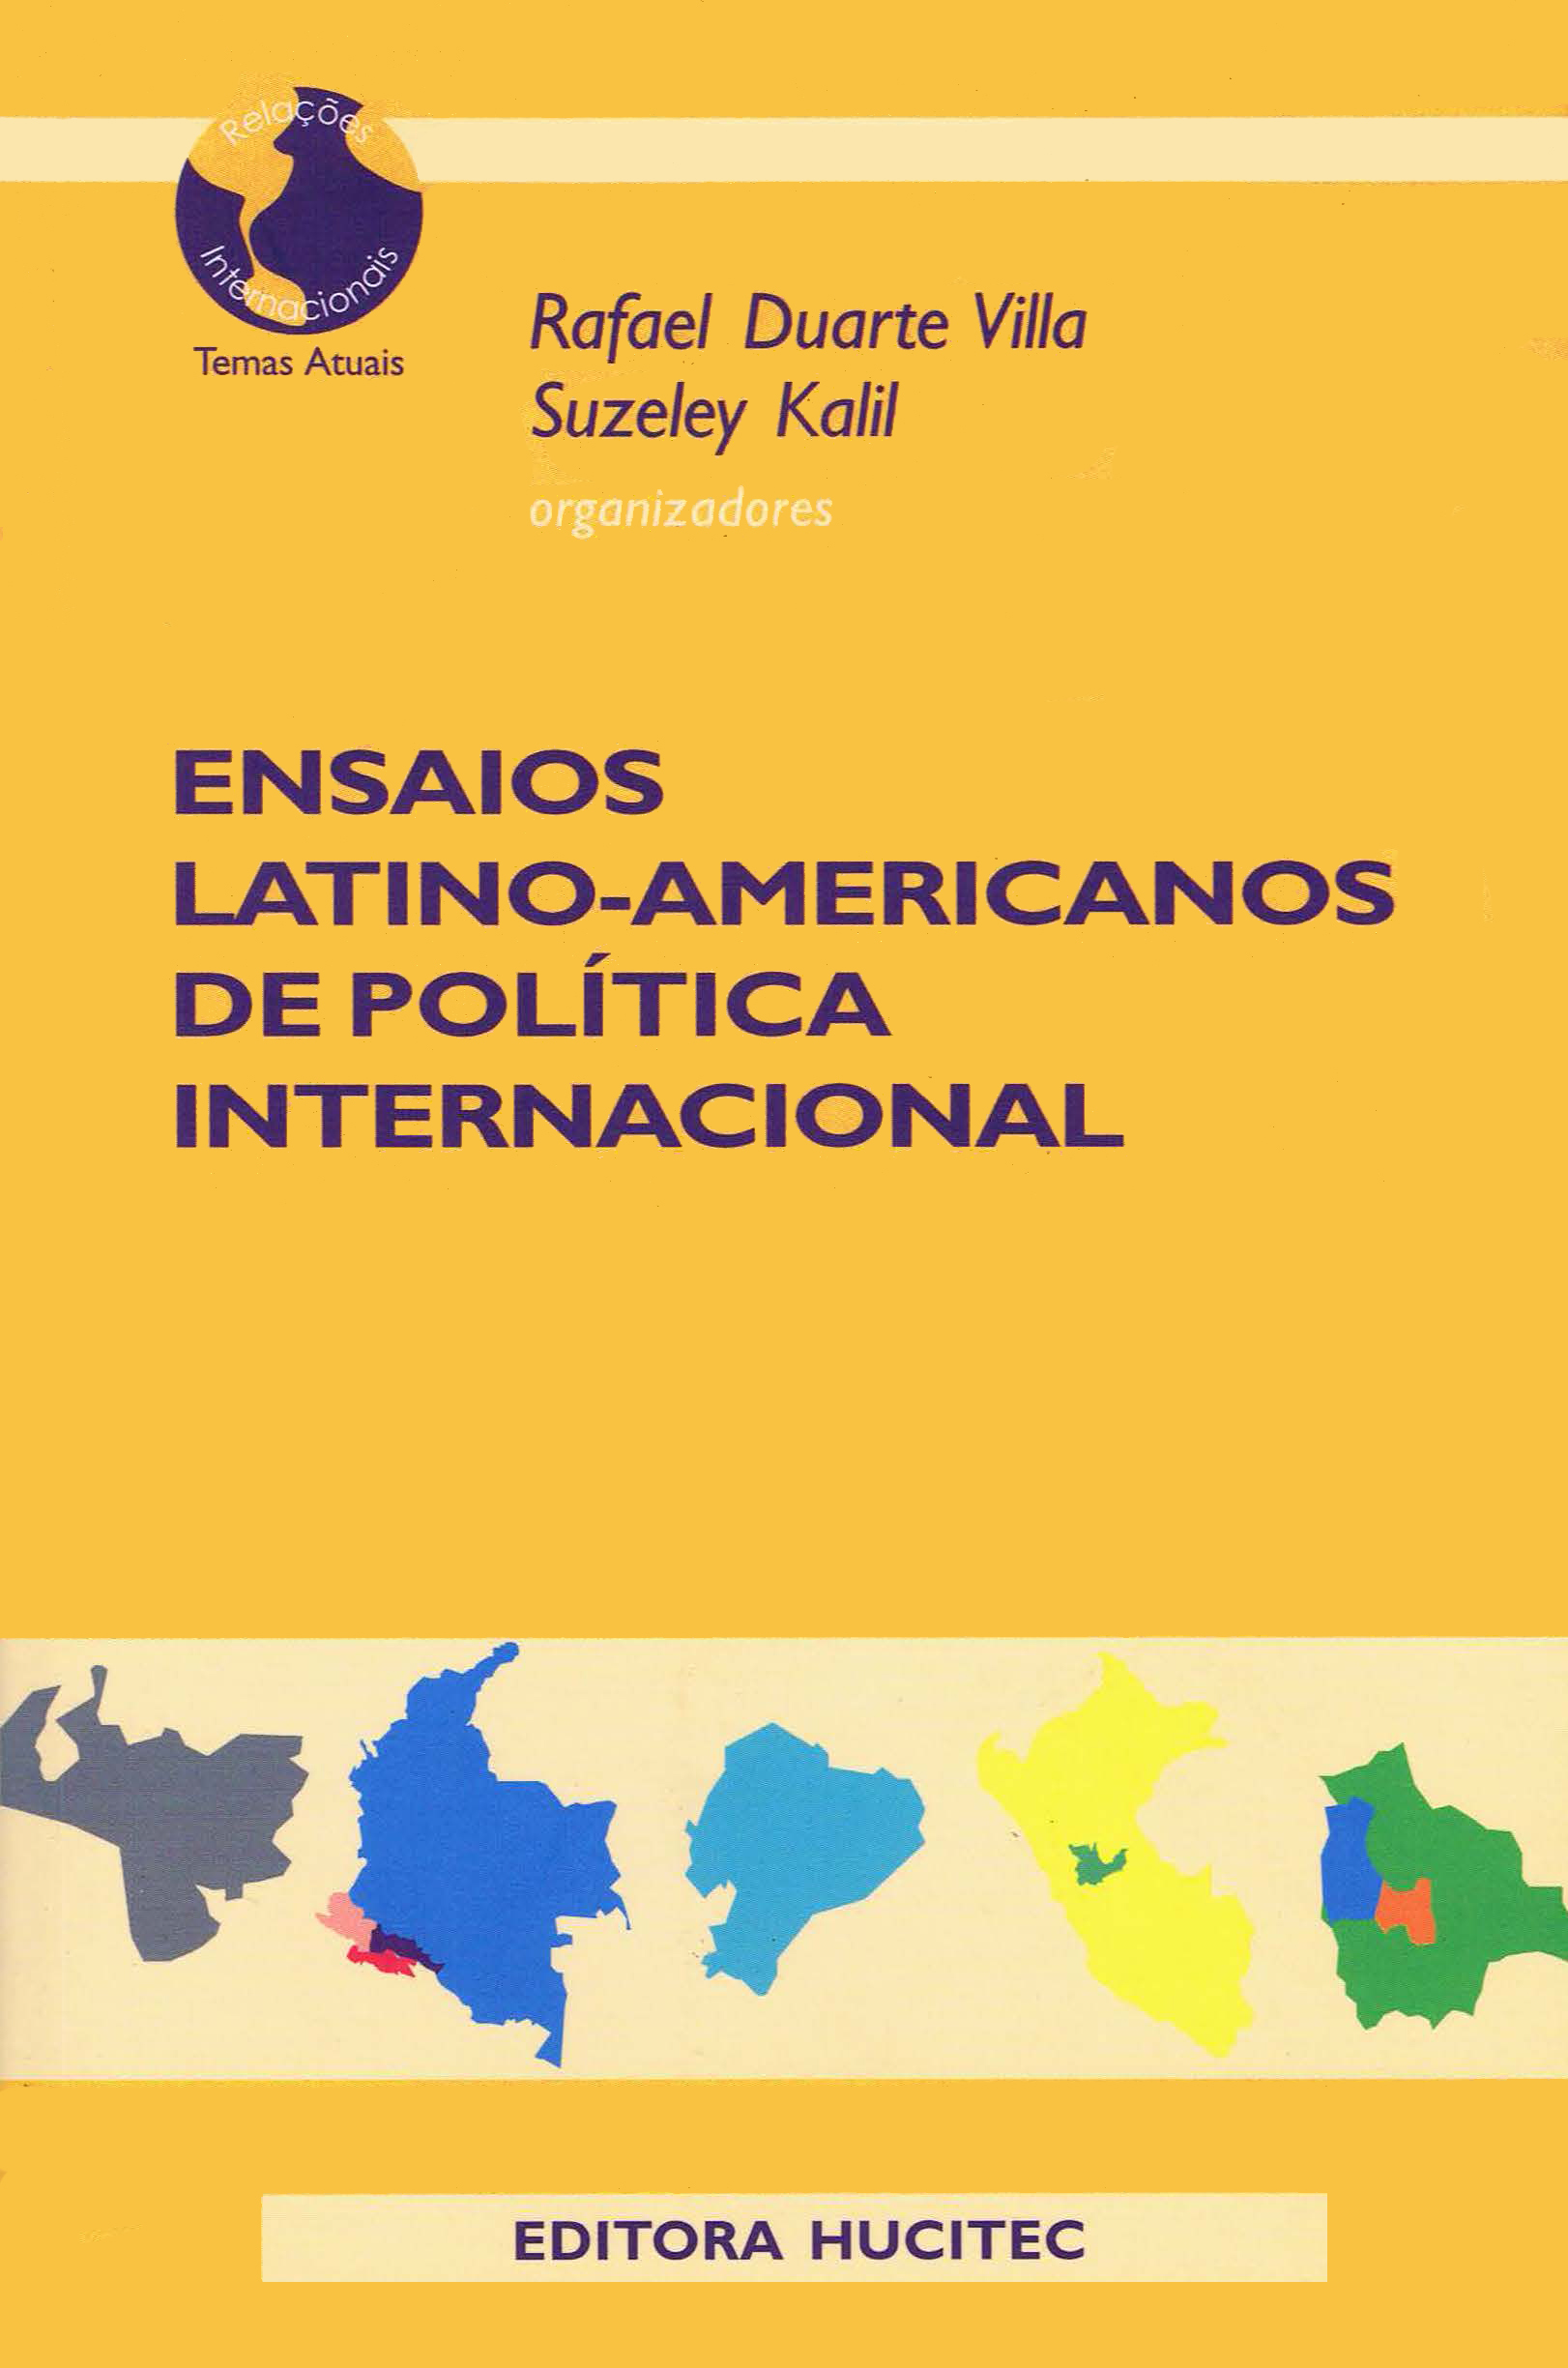 Rafael Duarte Villa & Suzeley Kalil  |  Ensaios latino-americanos de política internacional